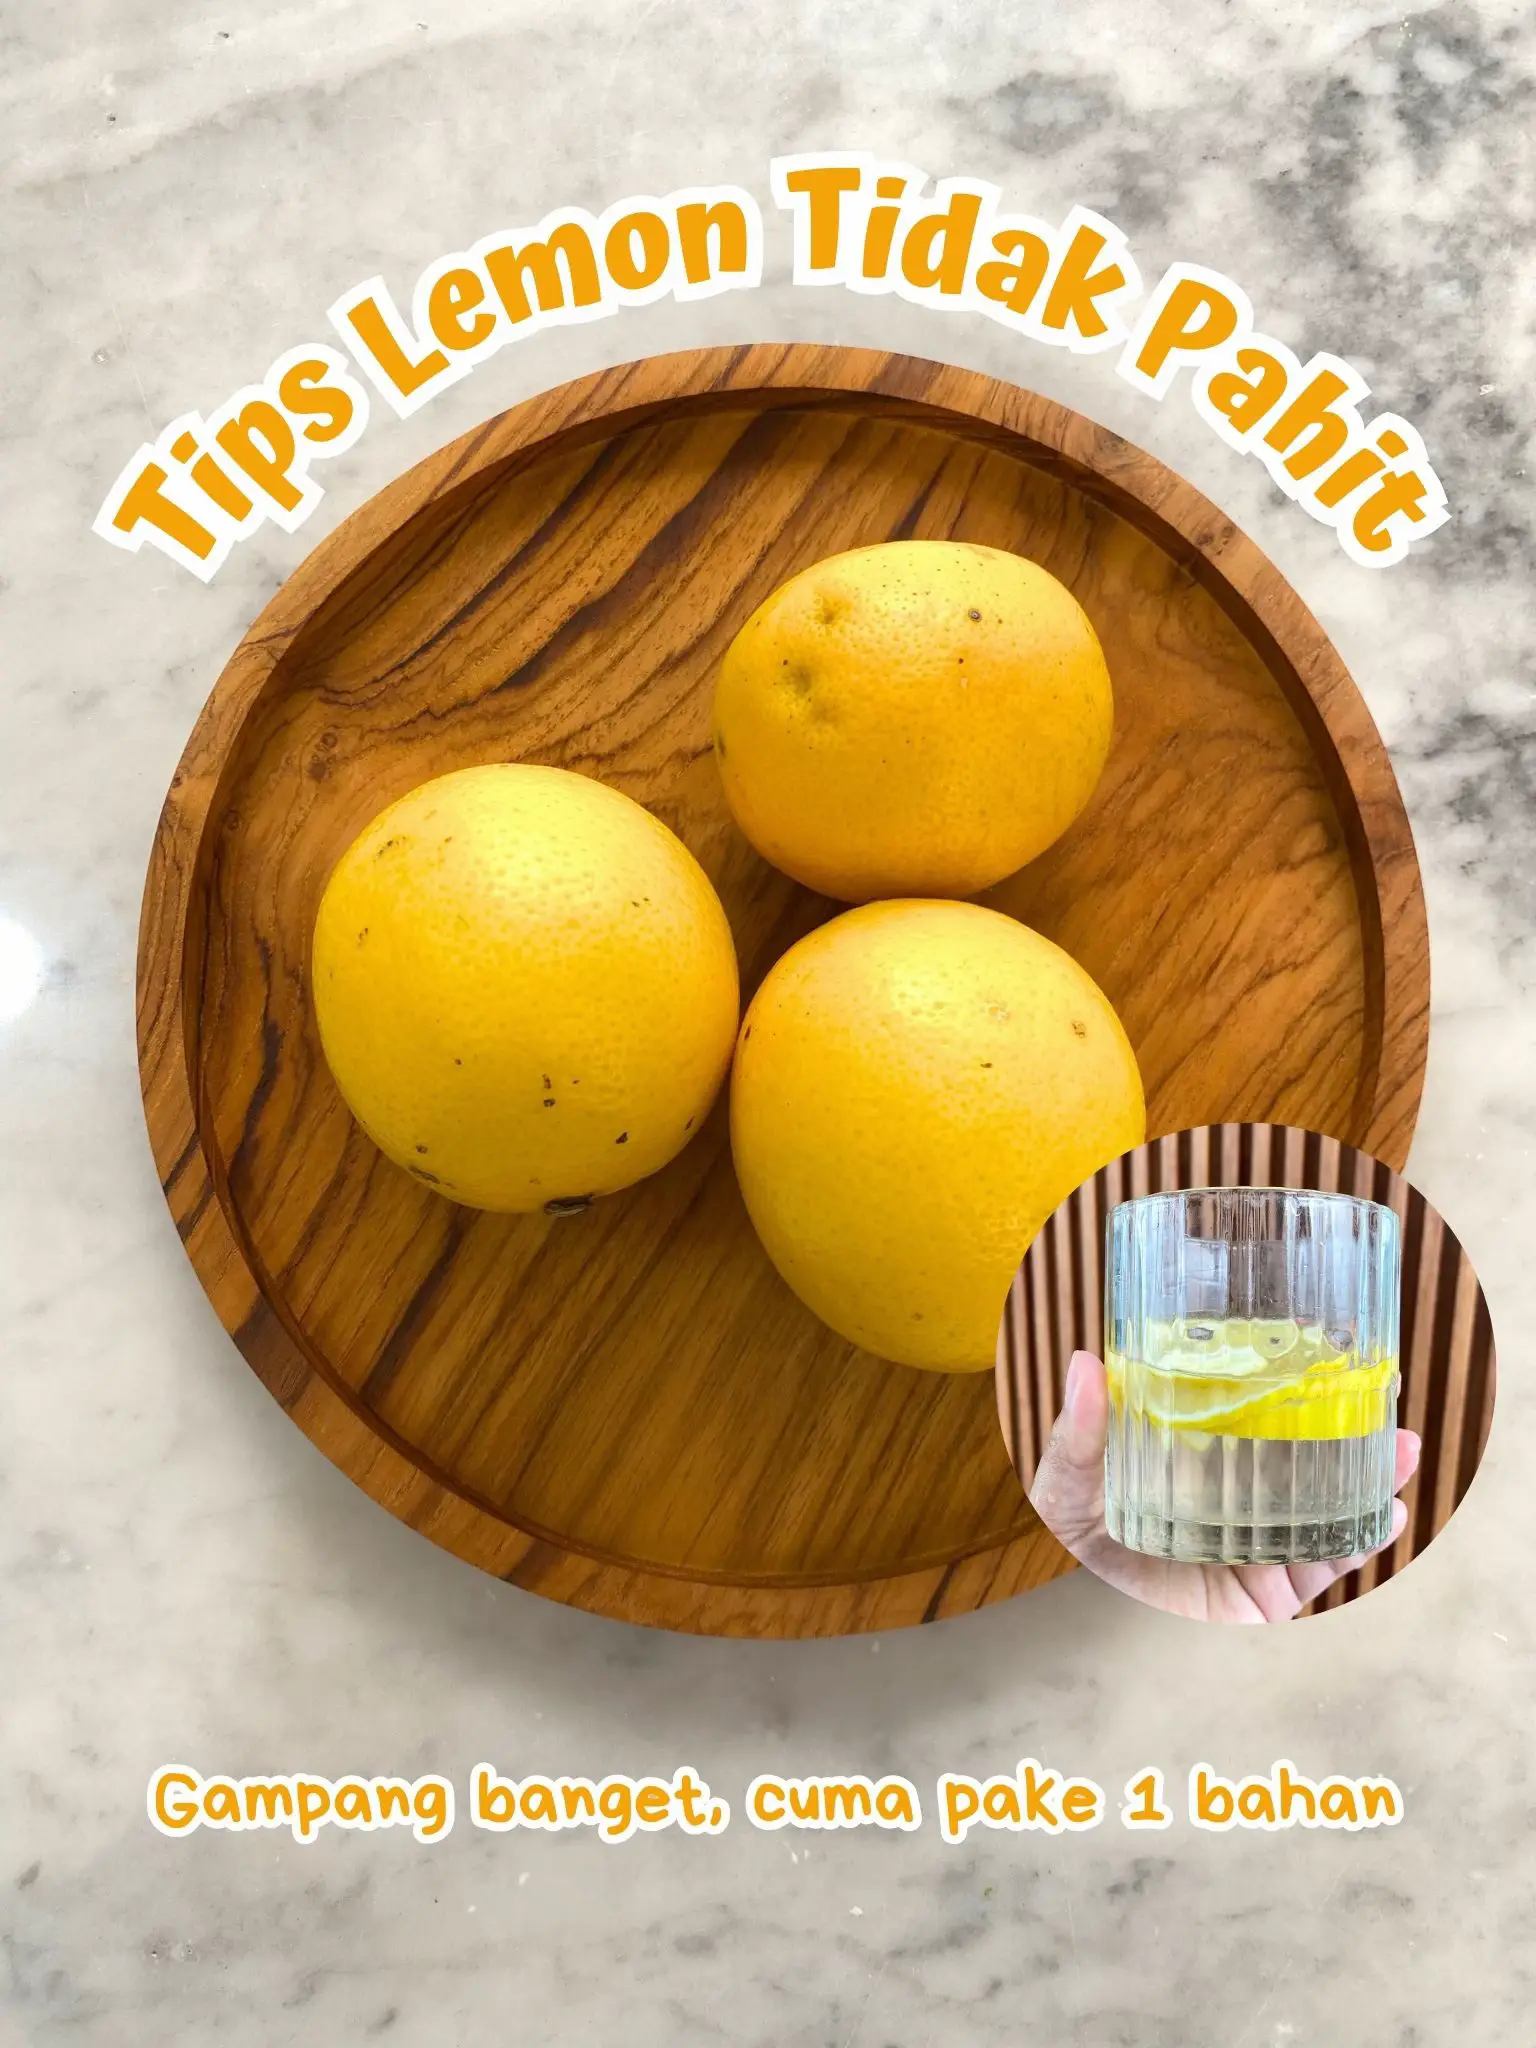 Gambar Tips lemon tidak pahit, gampang banget! (0)